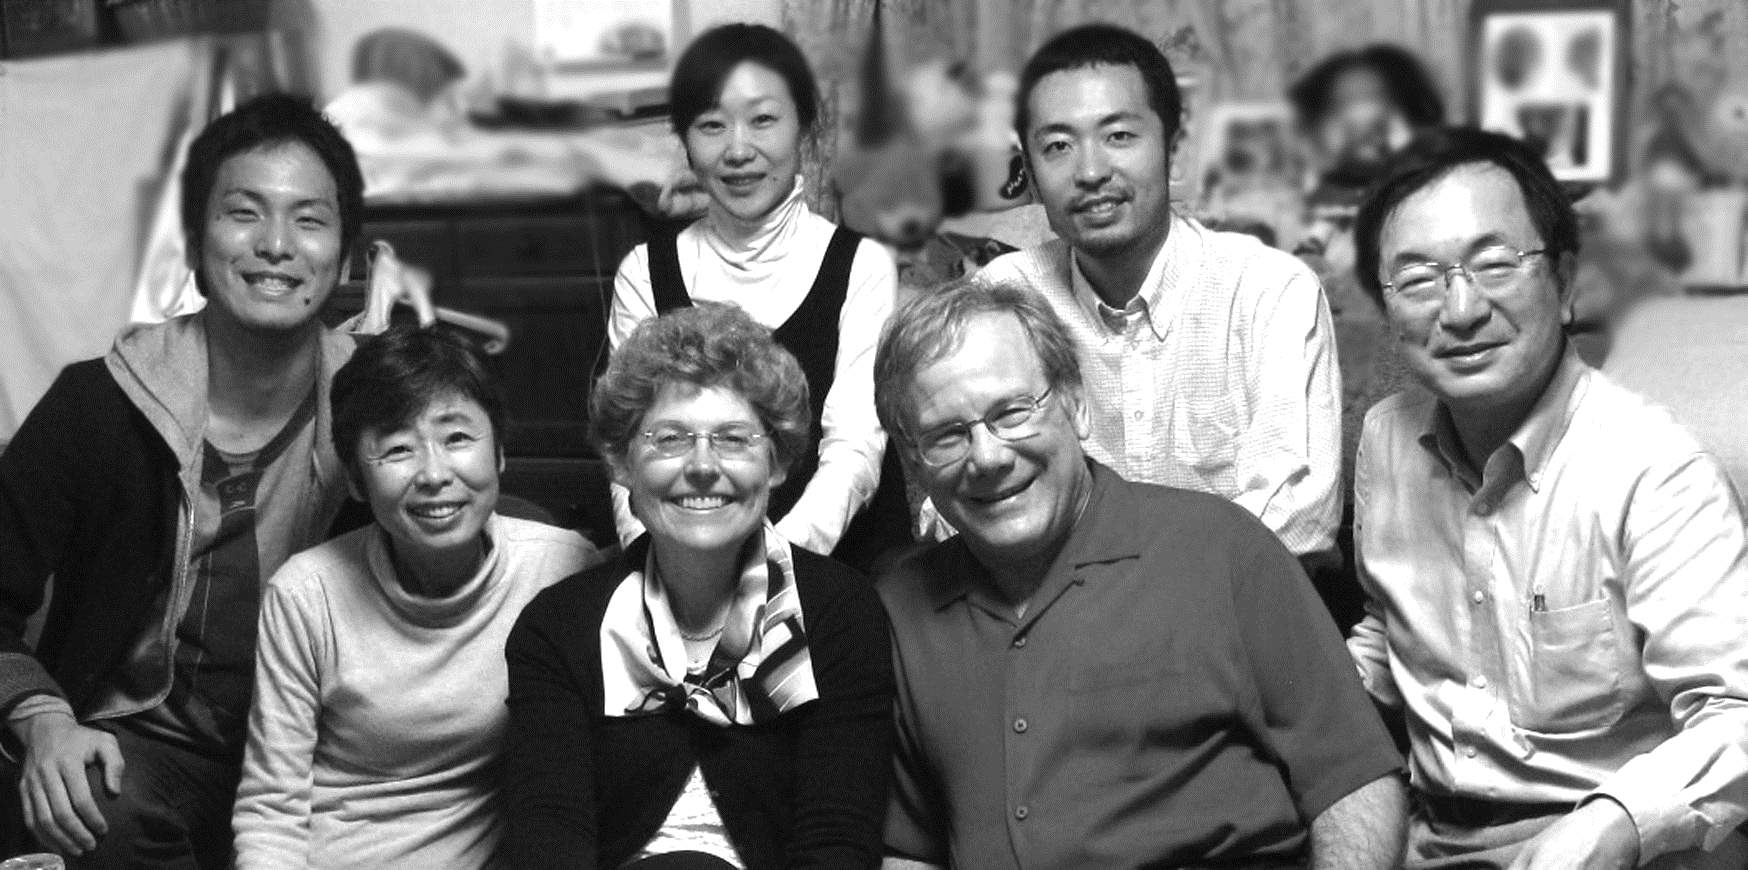 Ishiwata family with Dave and Jenny Thomas at Ishiwata's home in Tokyo. From left to right, front: Akiko (Ishiwata's wife) Jenny and Dave Thomas. Rear: Shusuke, Mamiko (Shintaro's wife), Shintaro, and Ishiwata.